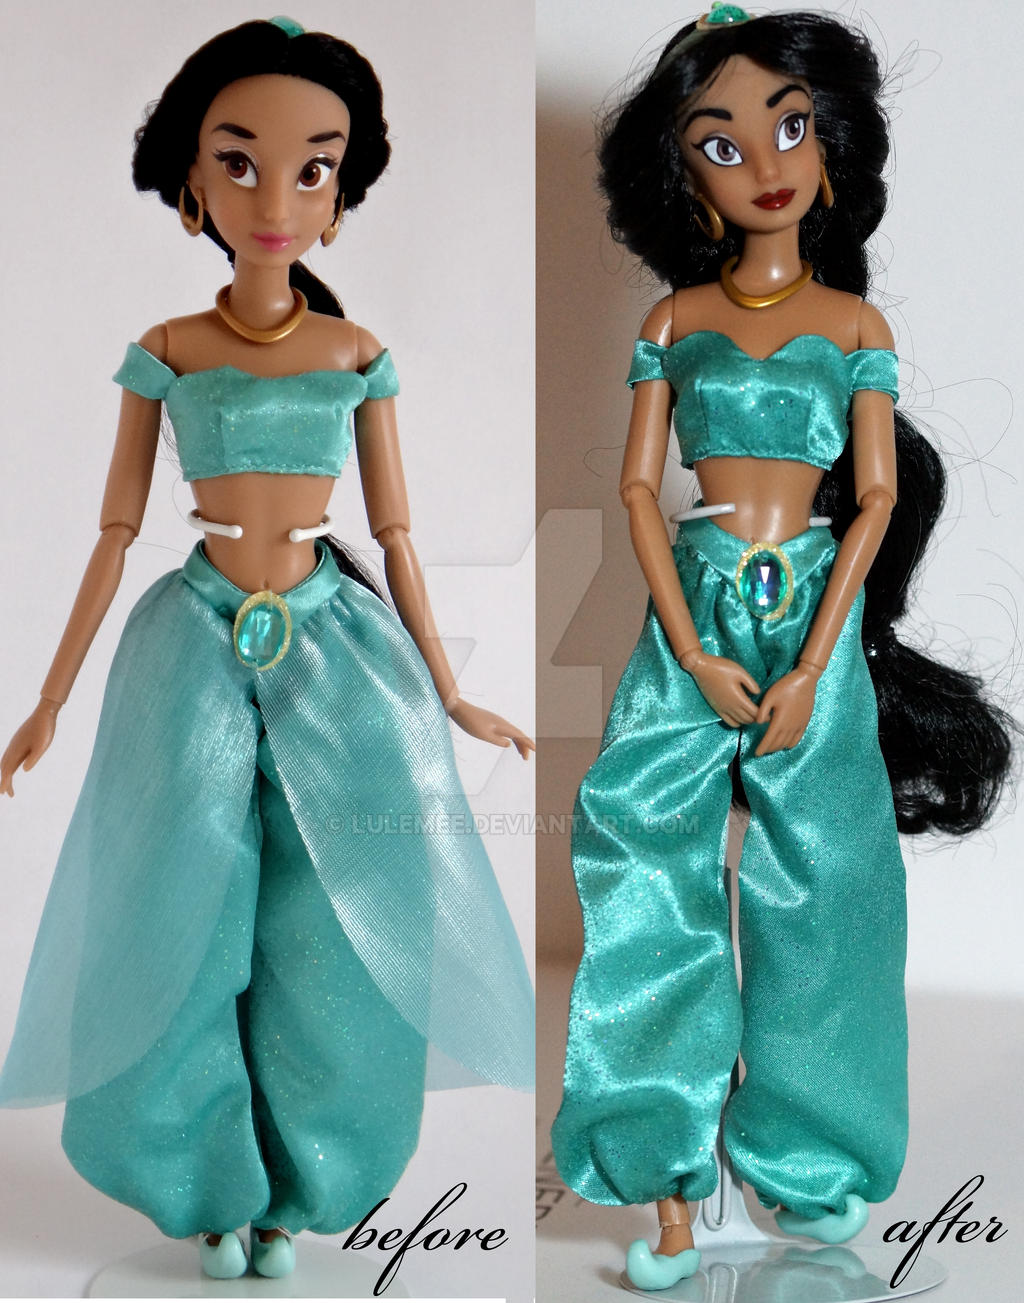 Disney Jasmine OOAK doll by lulemee on DeviantArt